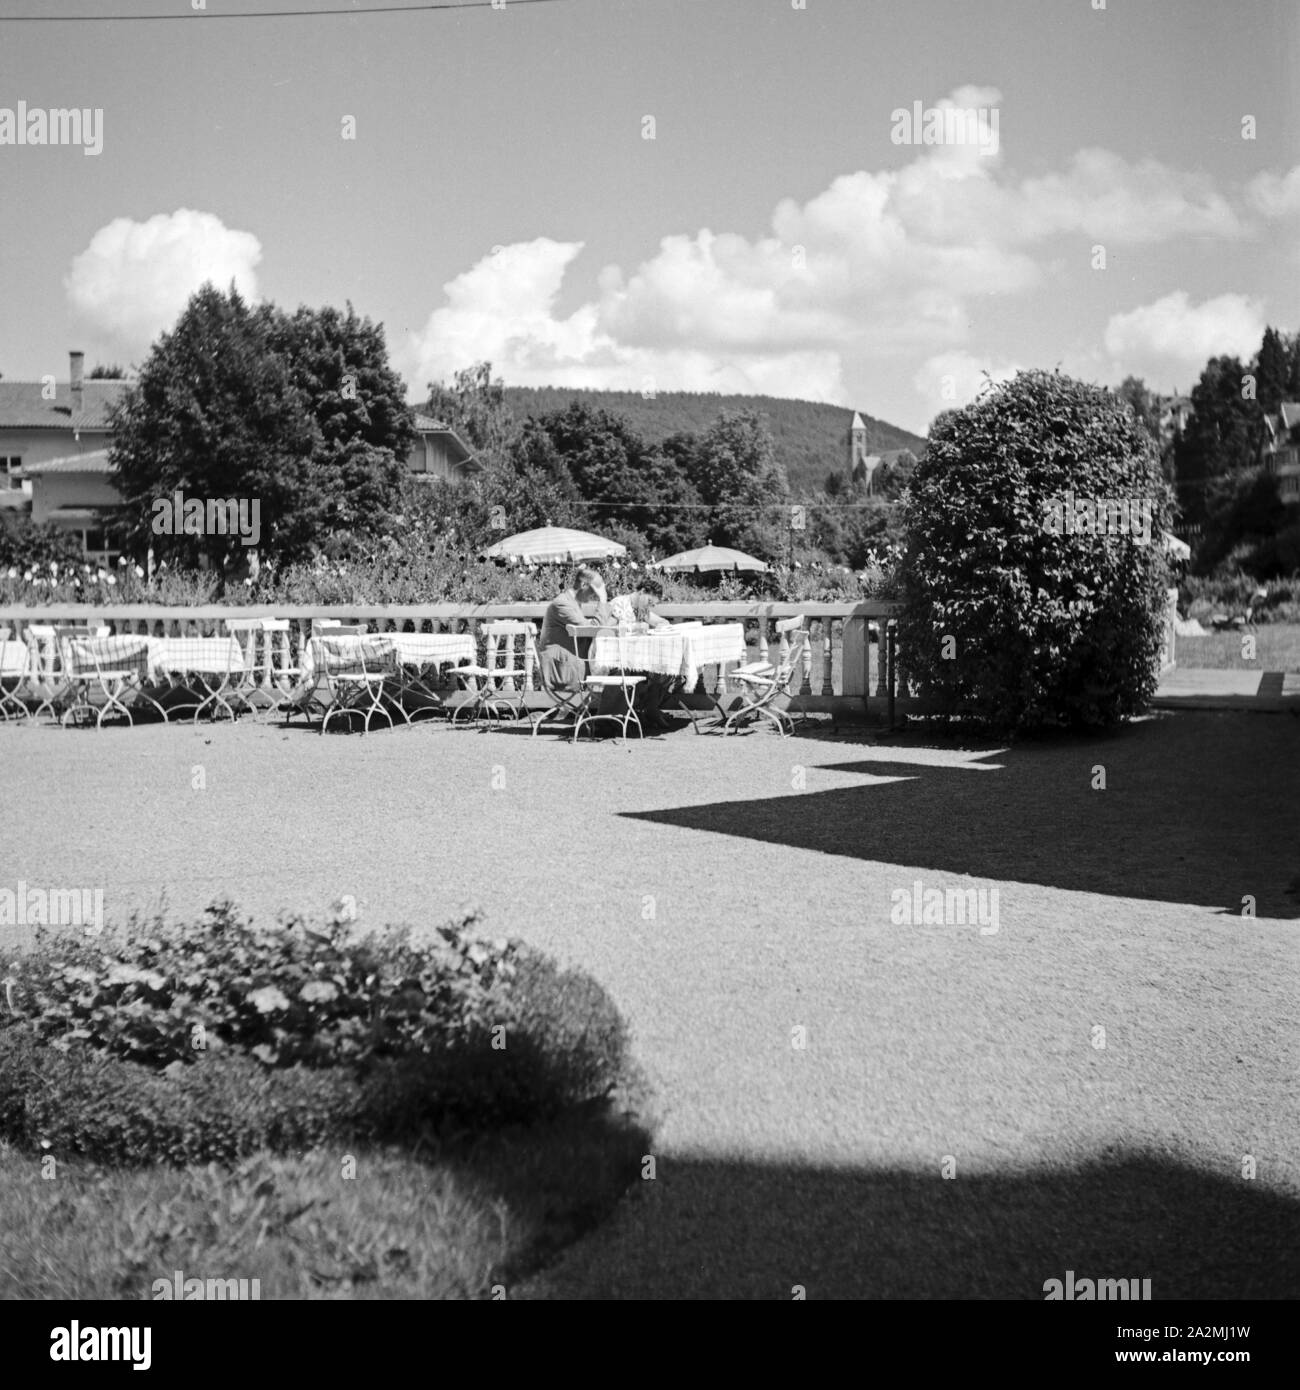 Blick auf ein Gartenrestaurant (ristorante nel giardino) im Schwarzwald, Deutschland 1930er Jahre. Vista di un ristorante con giardino in zona della Foresta Nera, Germania 1930s. Foto Stock